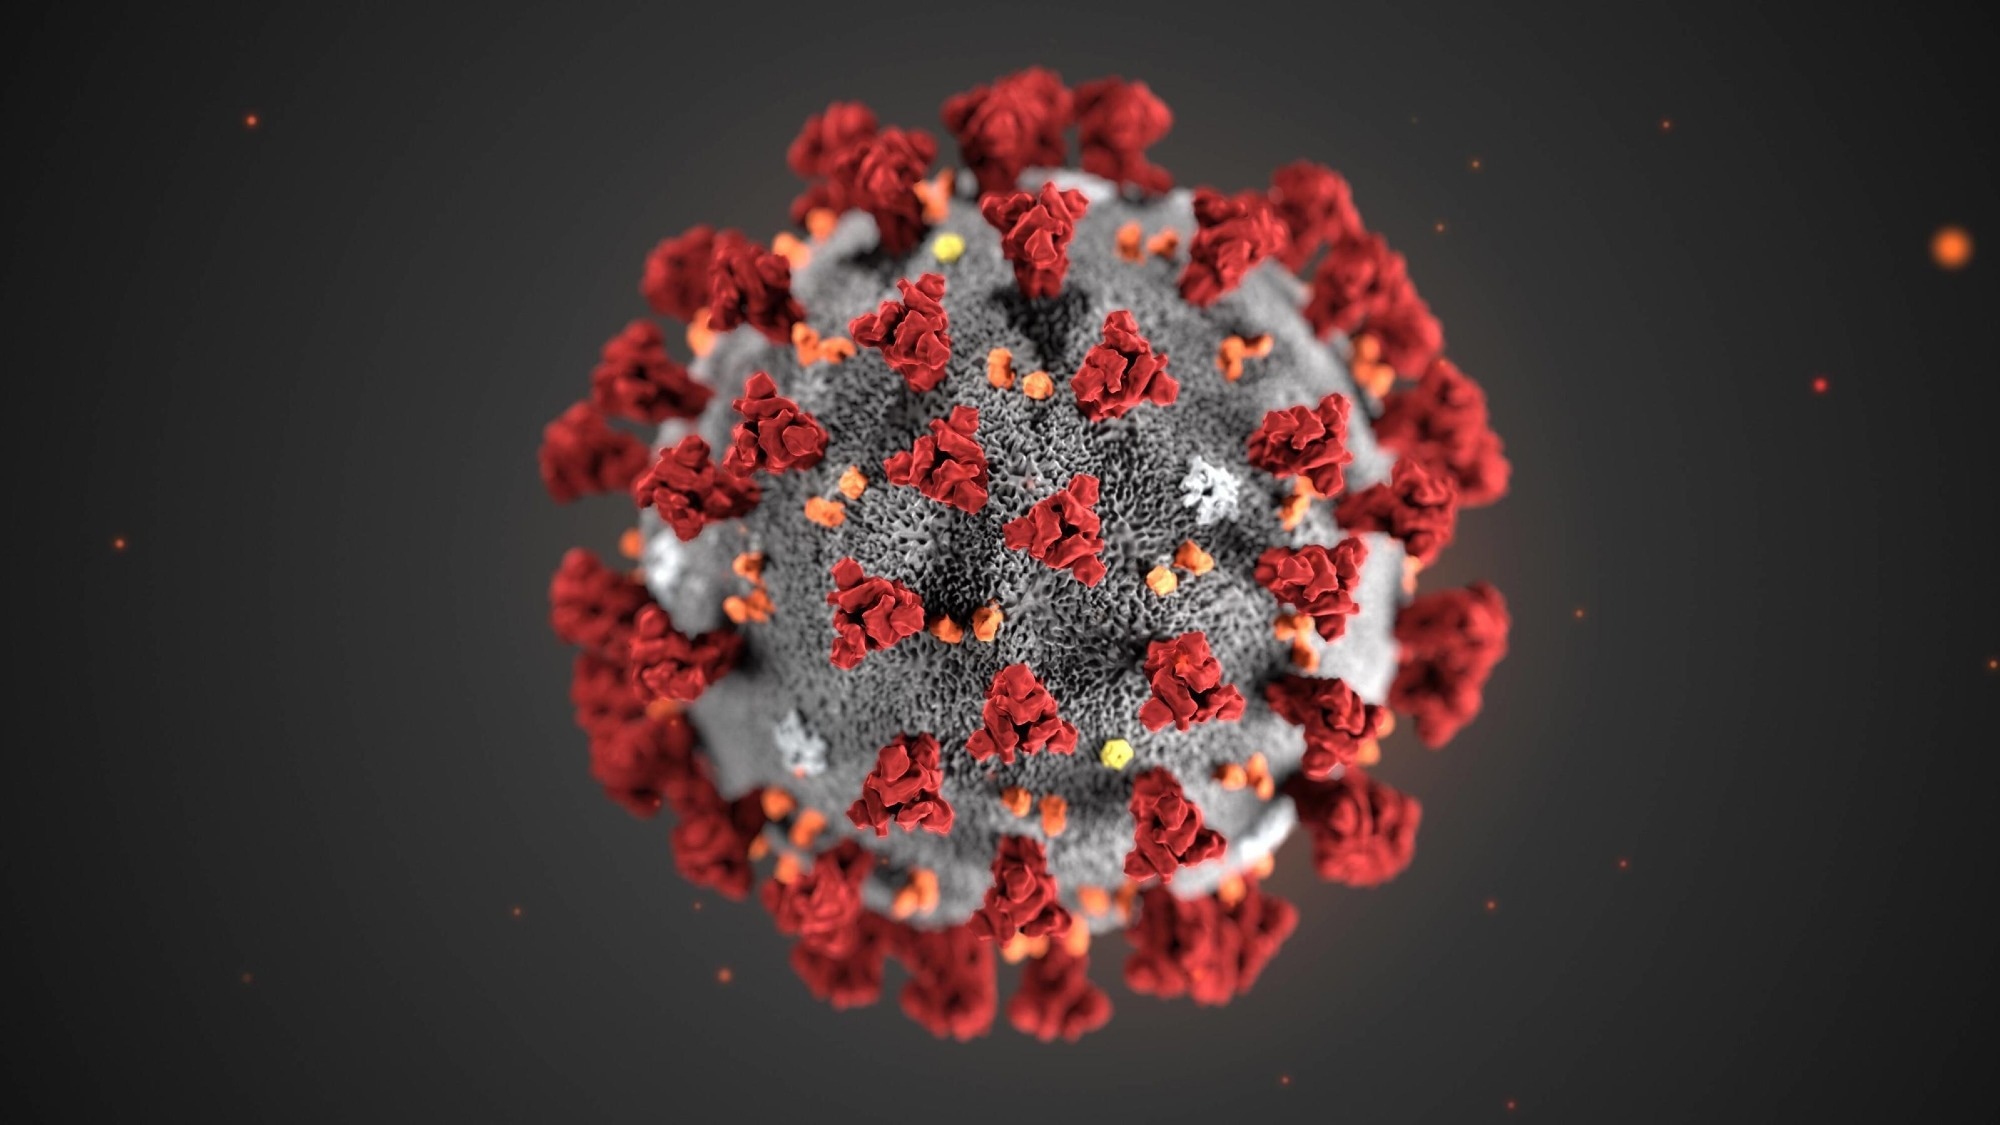 Study: A syntenin inhibitor blocks endosomal entry of SARS-CoV-2 and a panel of RNA viruses. Image Credit: artofvisionn/Shutterstock